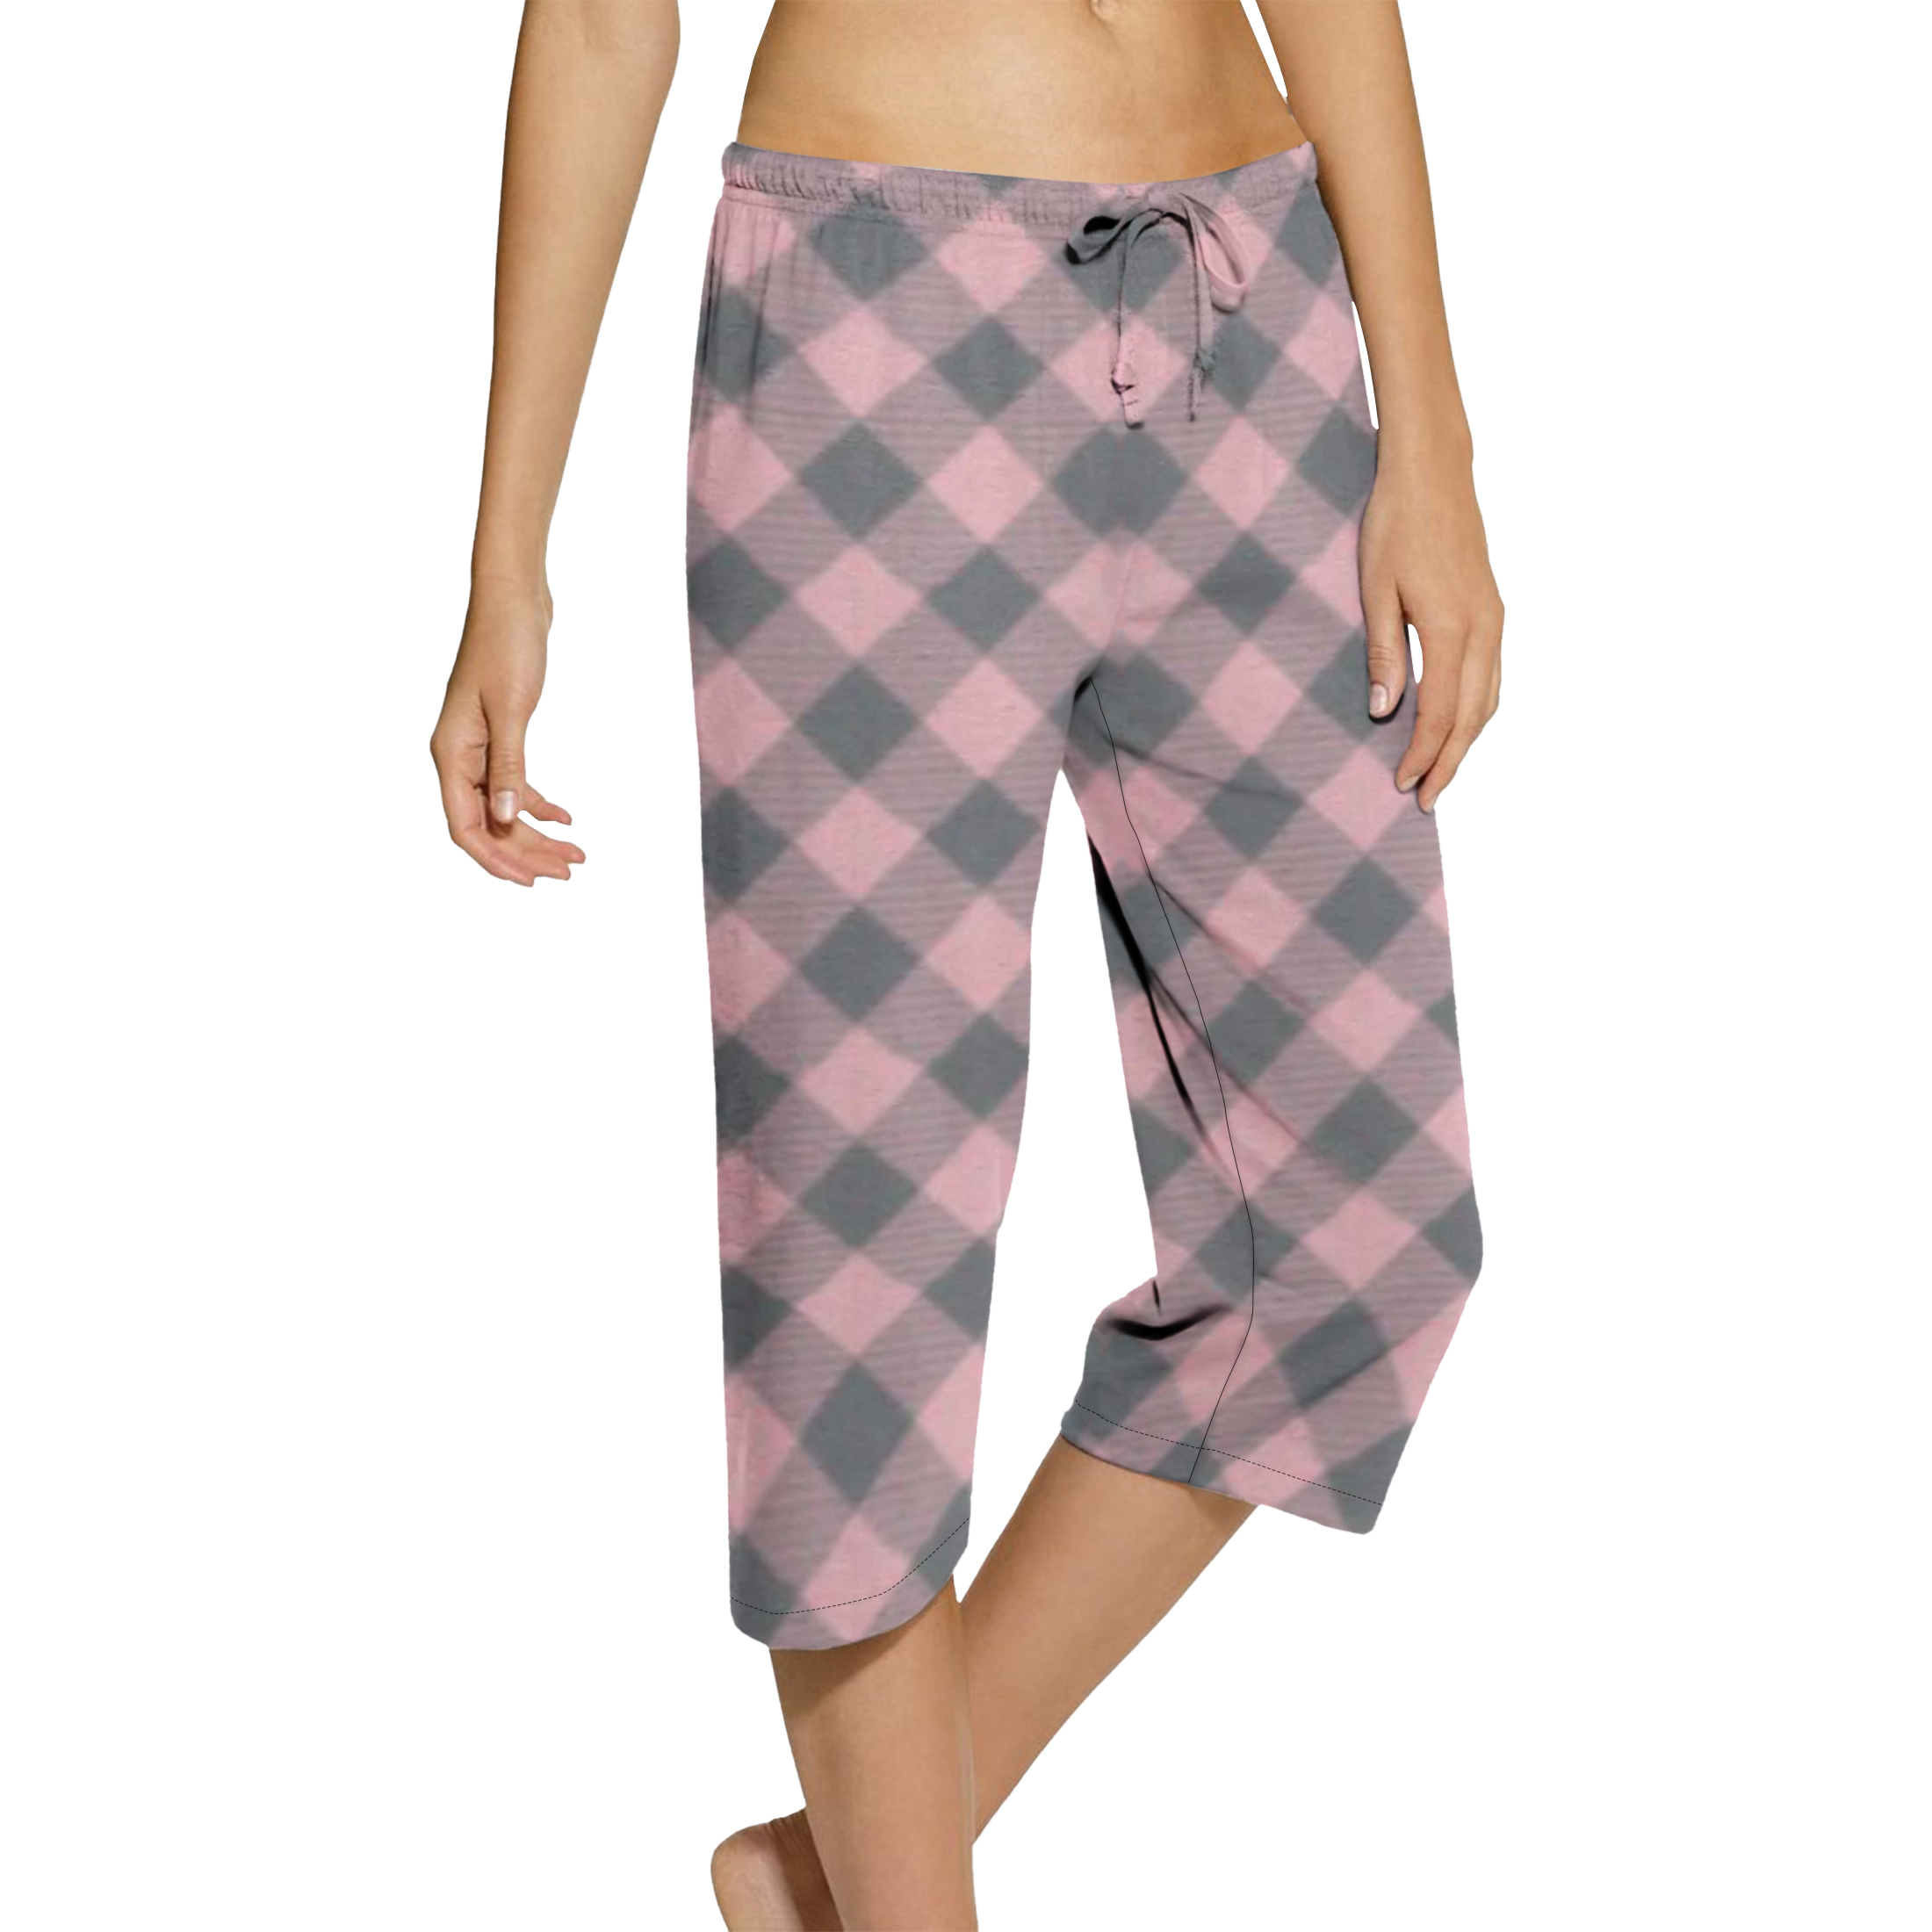 3-Pack: Ladies Printed Pajama Bottoms Capri Pants Sleepwear With Drawstring - Medium